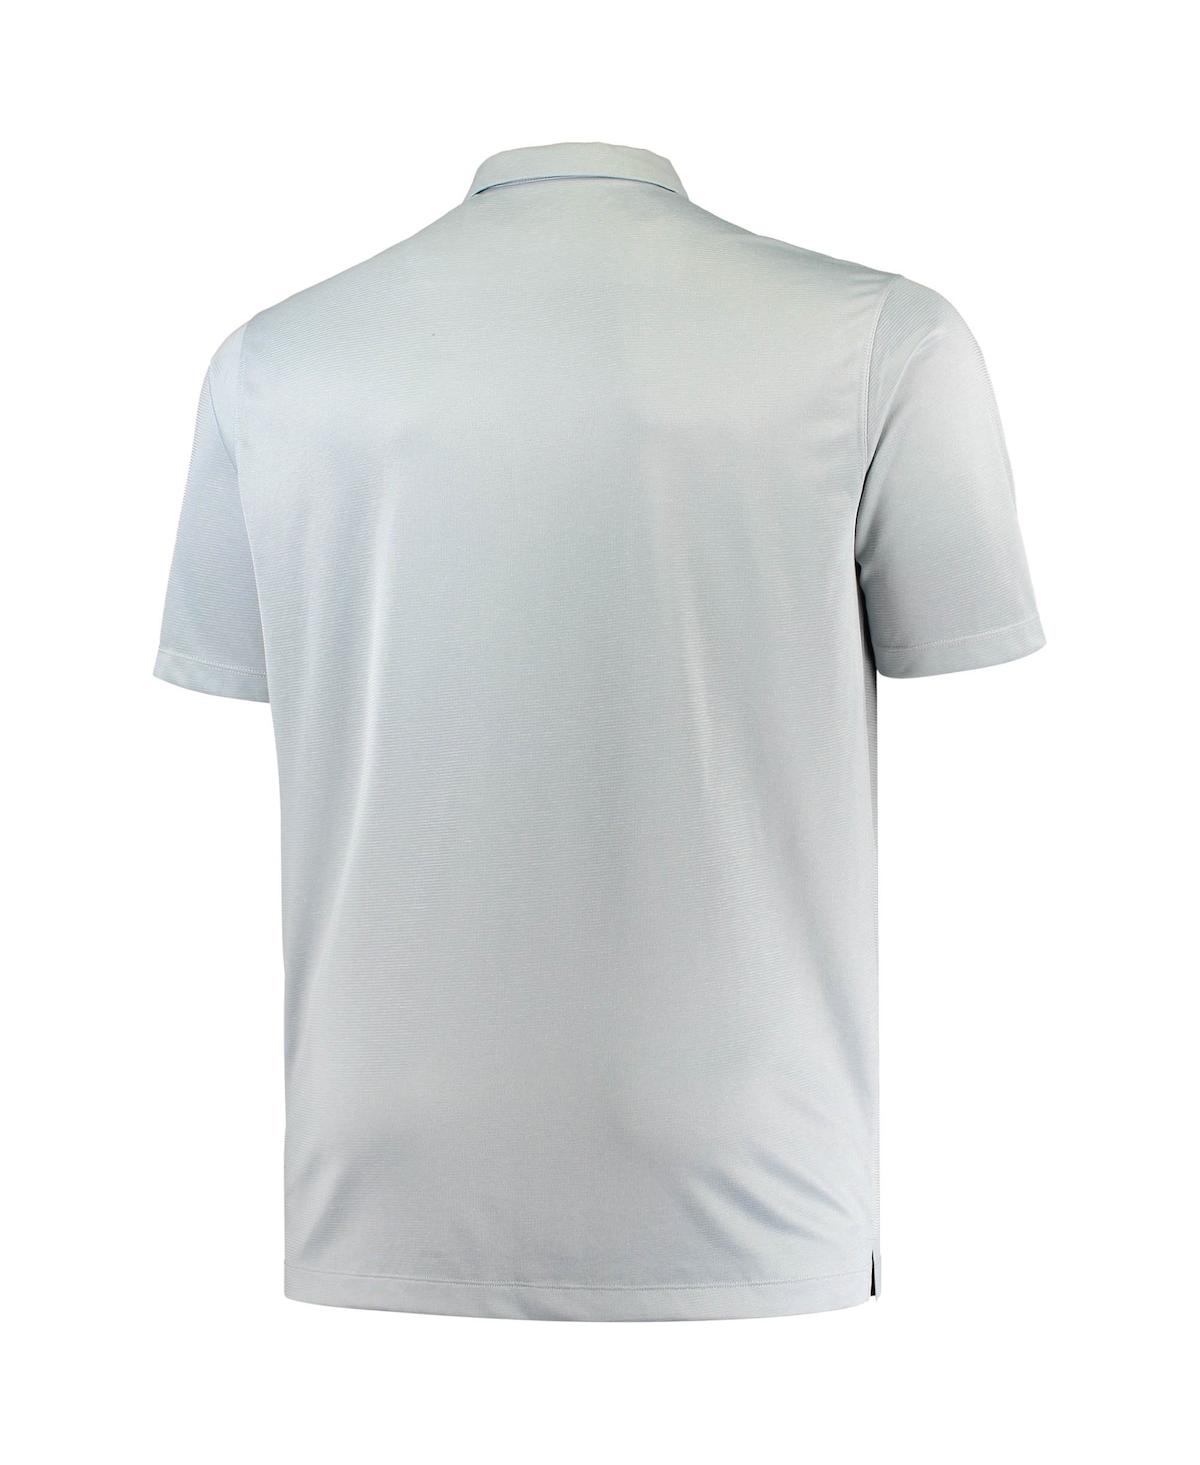 Shop Nike Men's  Heathered Gray Kentucky Wildcats Big And Tall Performance Polo Shirt